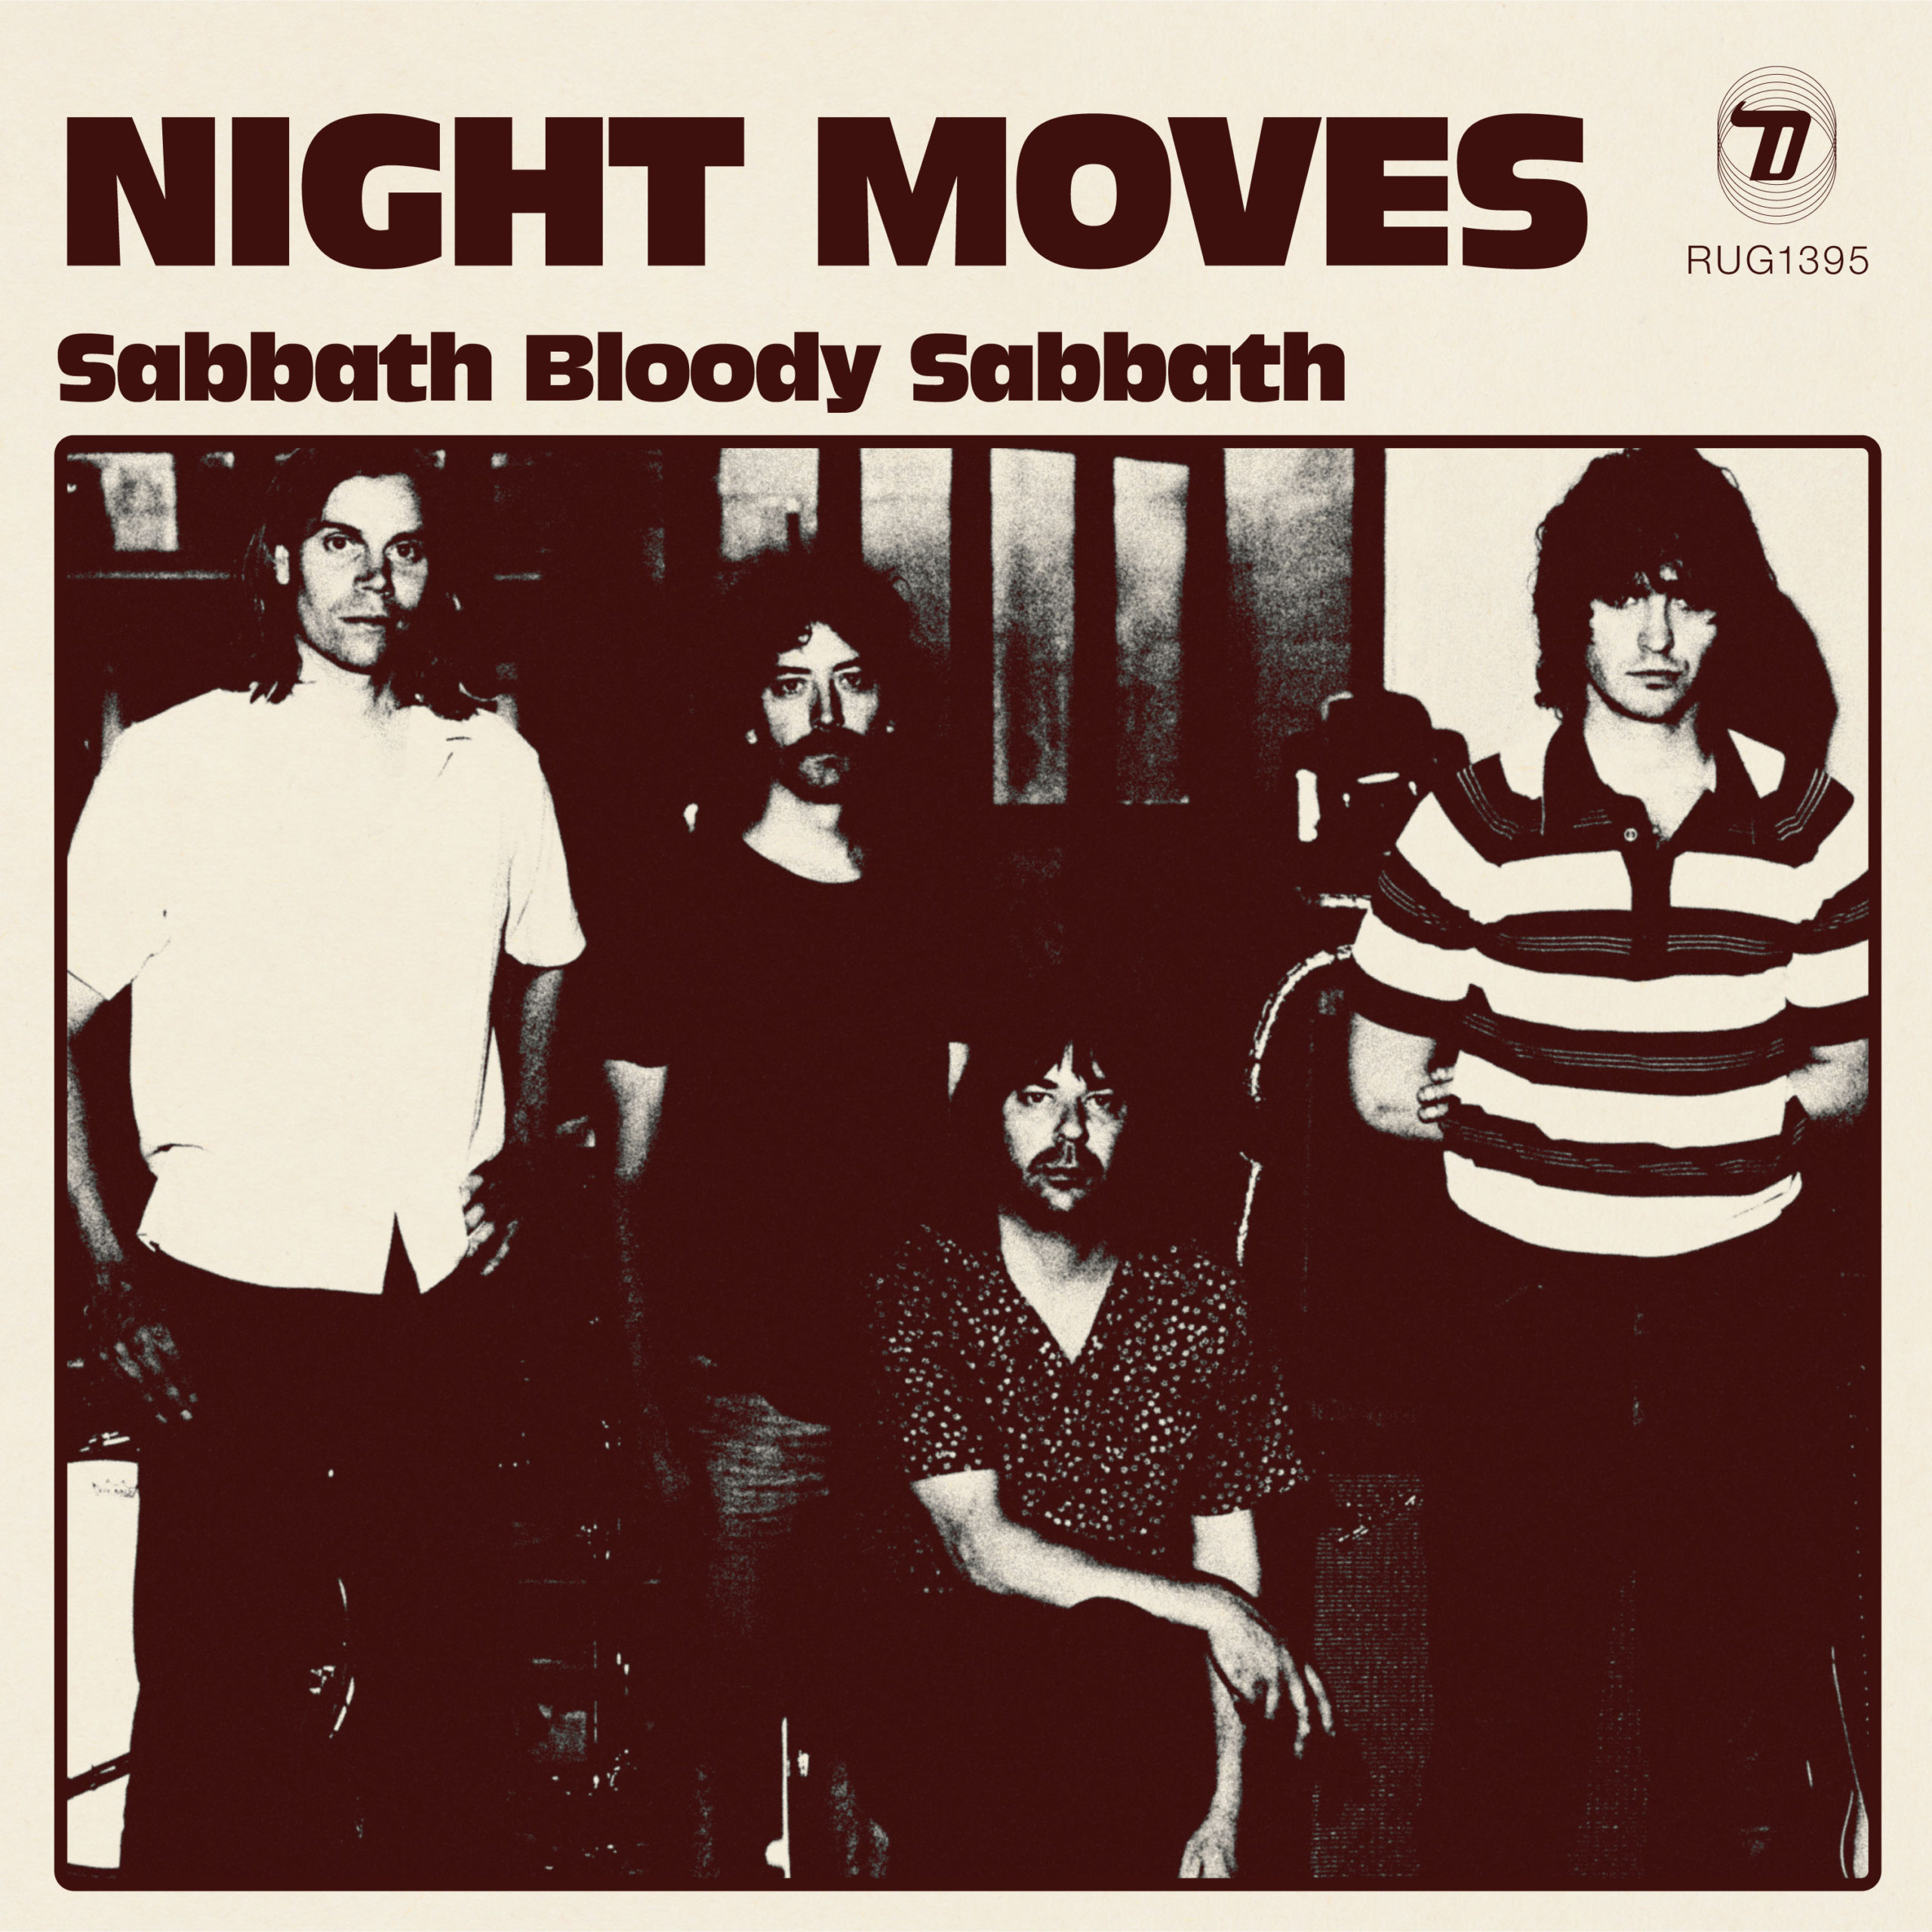 HEAR: Night Moves Covers “Sabbath Bloody Sabbath”